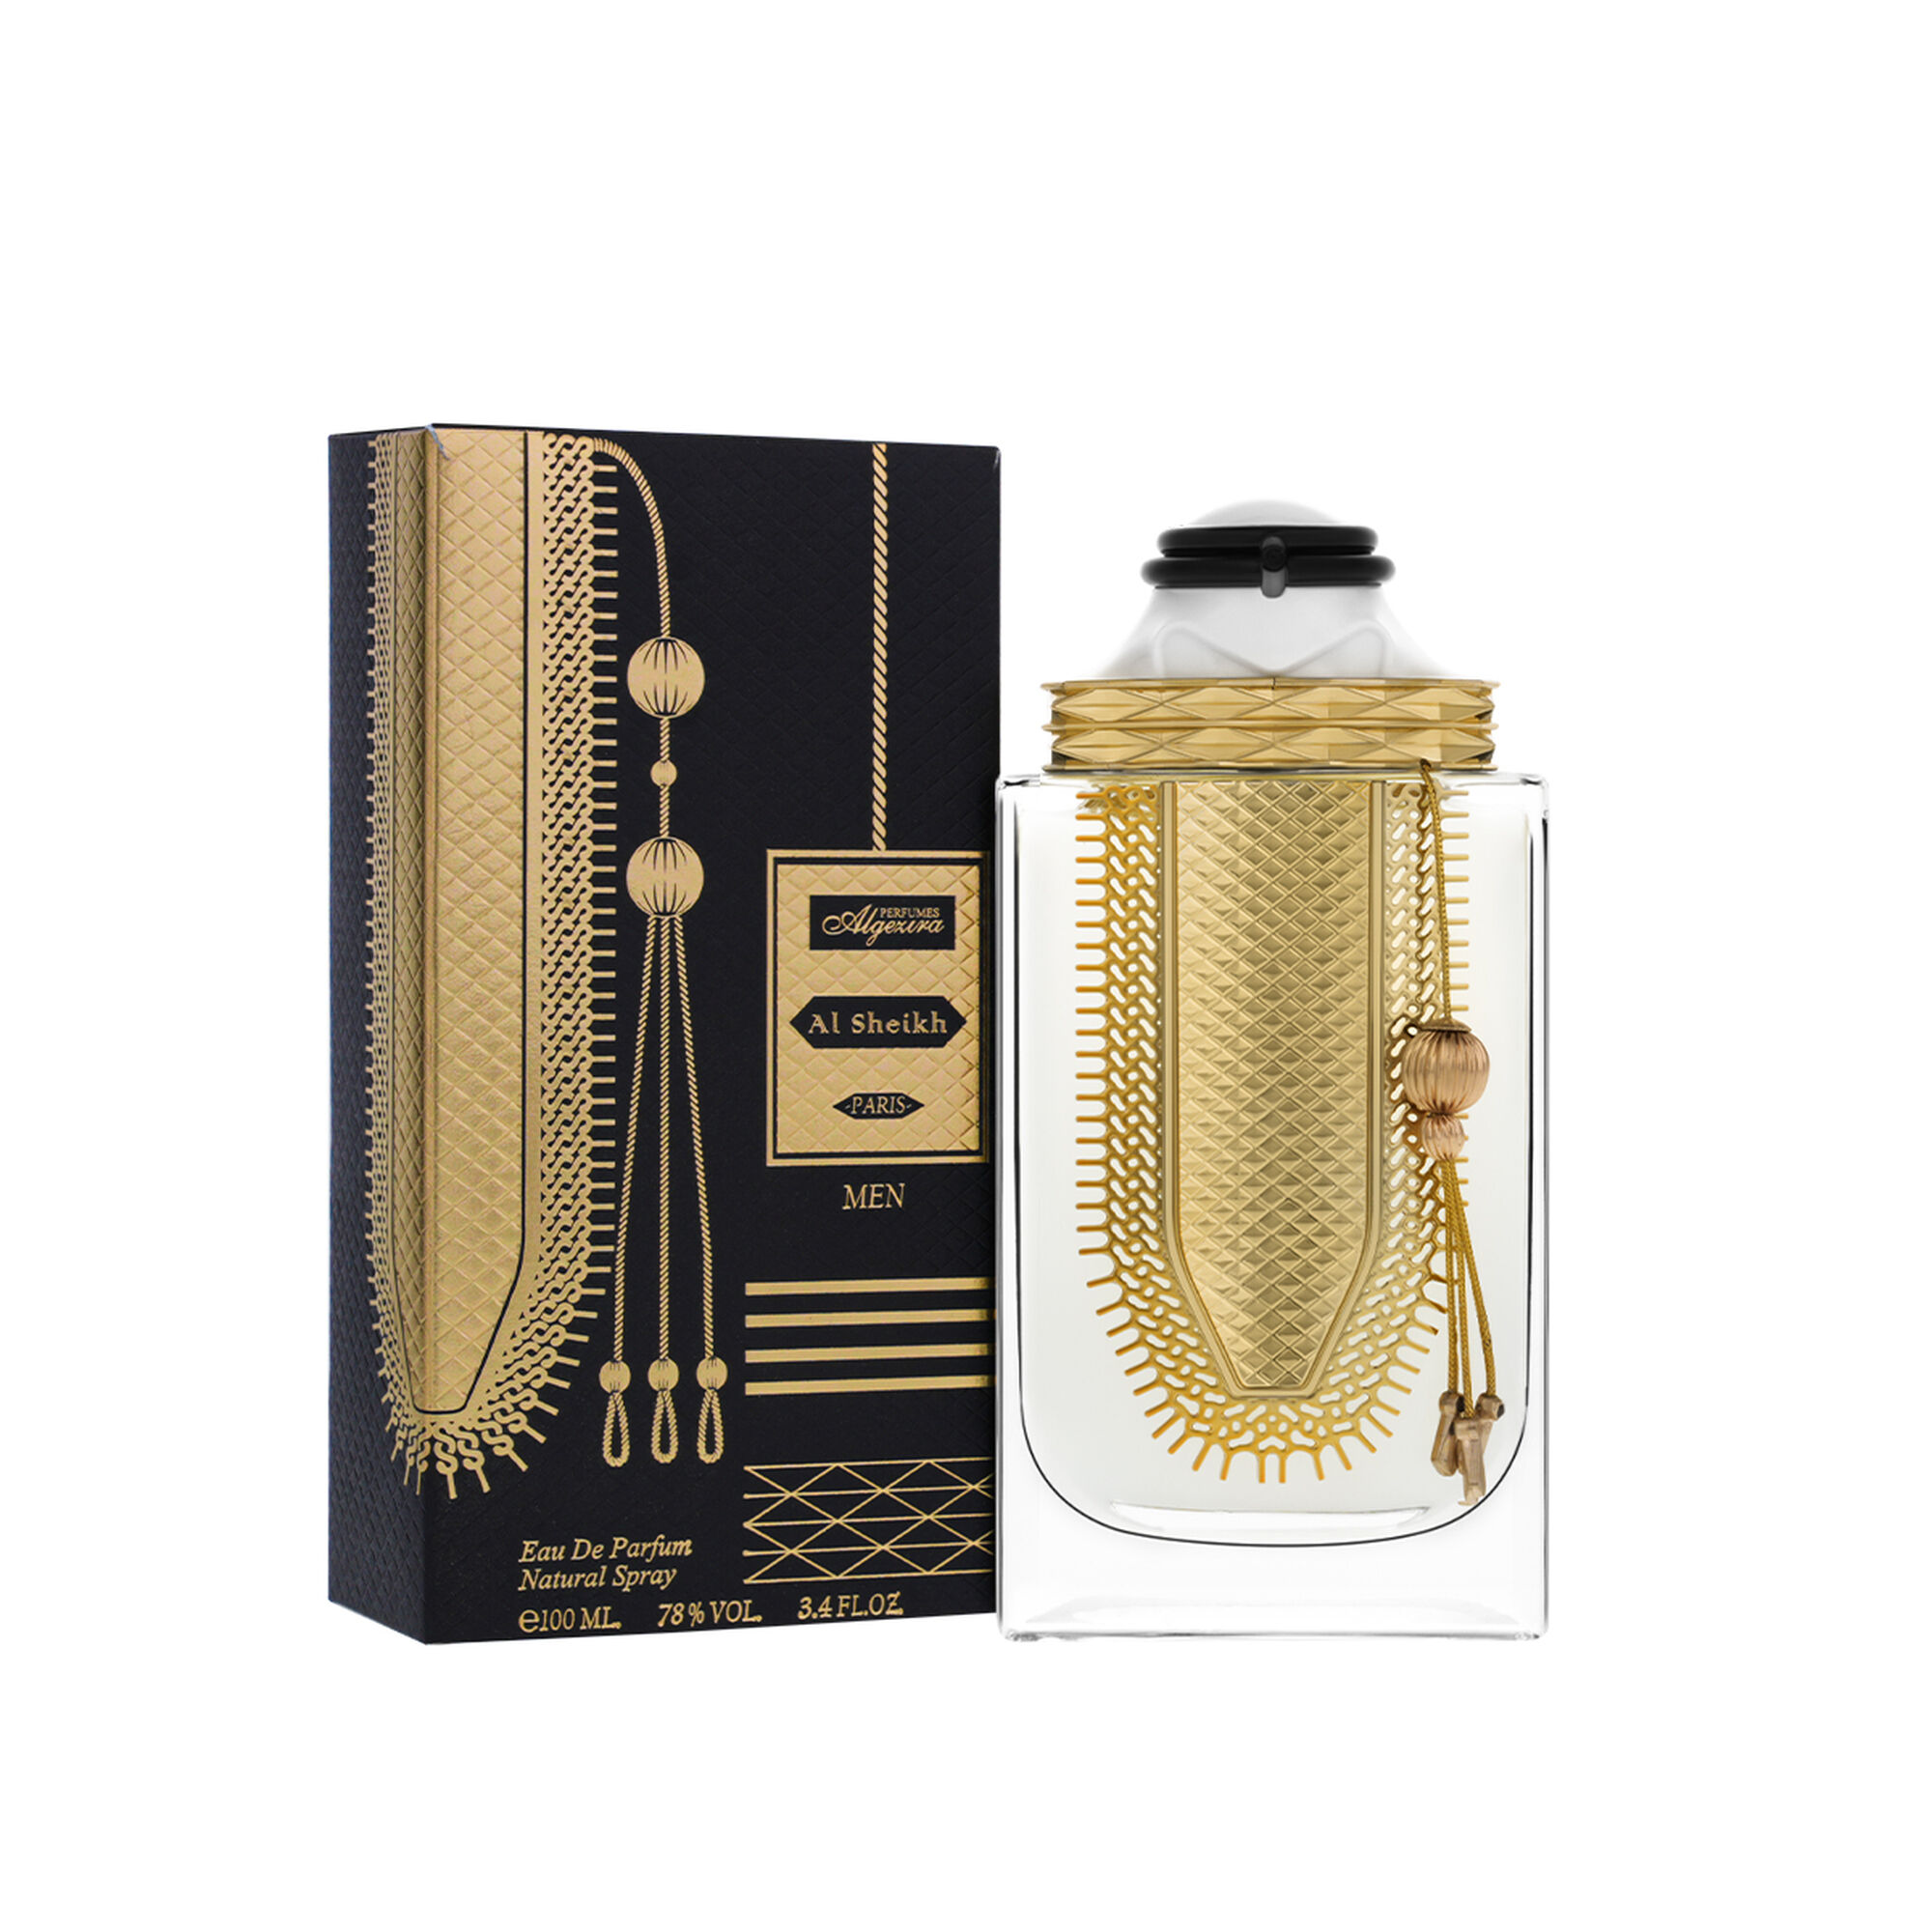 Al-Sheikh Black perfume for men 100 ml